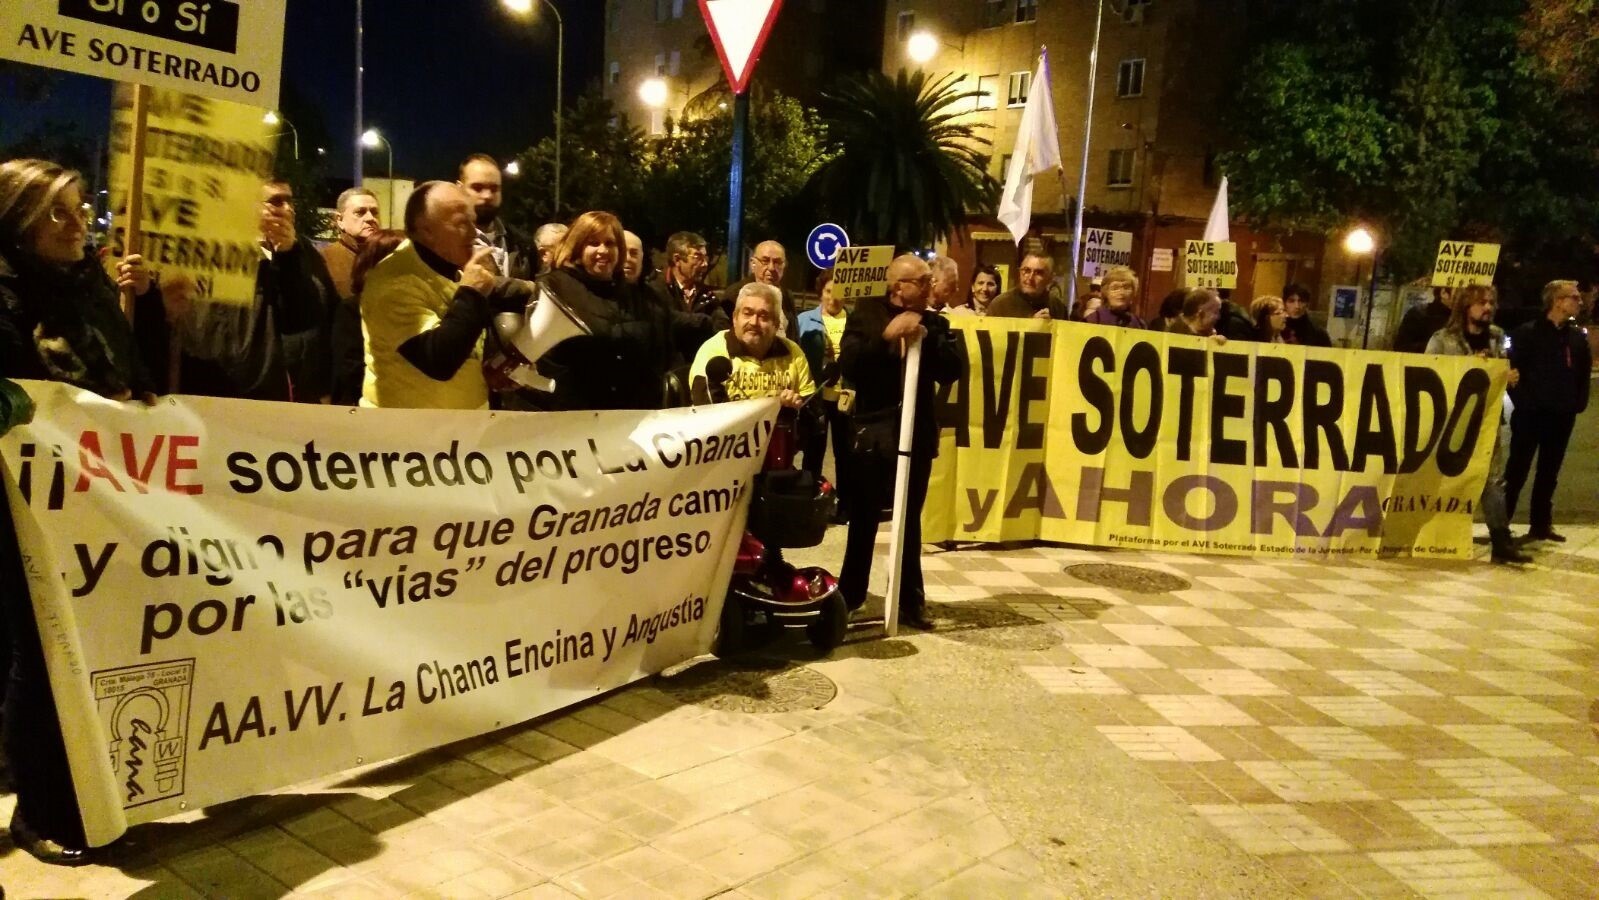 El PSOE dice que la negativa a convocar la Mesa del Ferrocarril «merma la calidad de vida democrática»